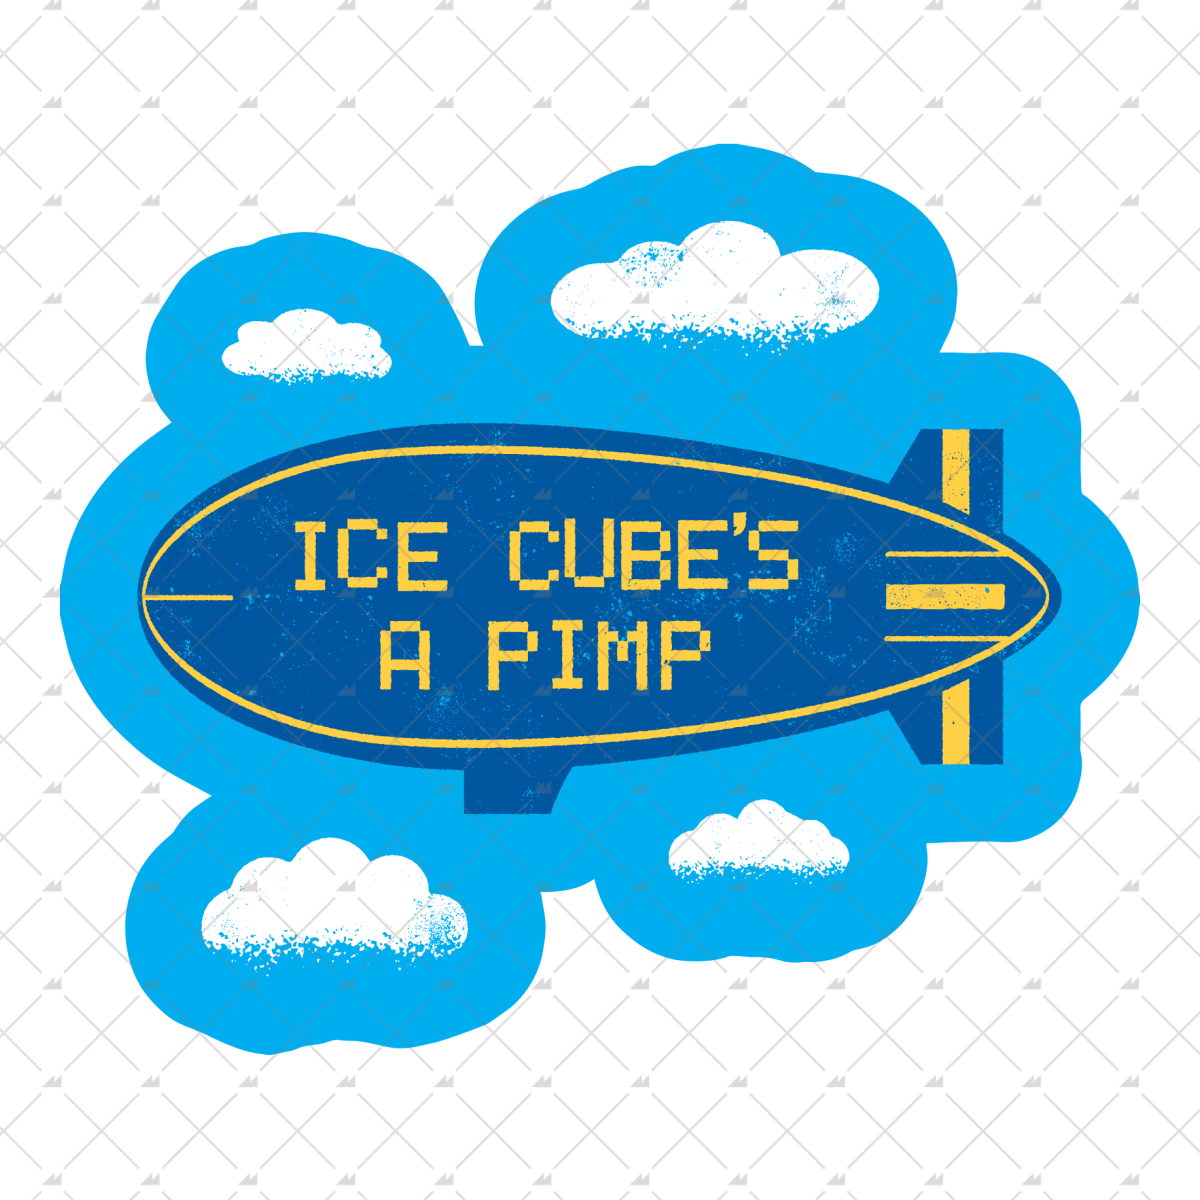 Ice Cube's A Pimp - Sticker